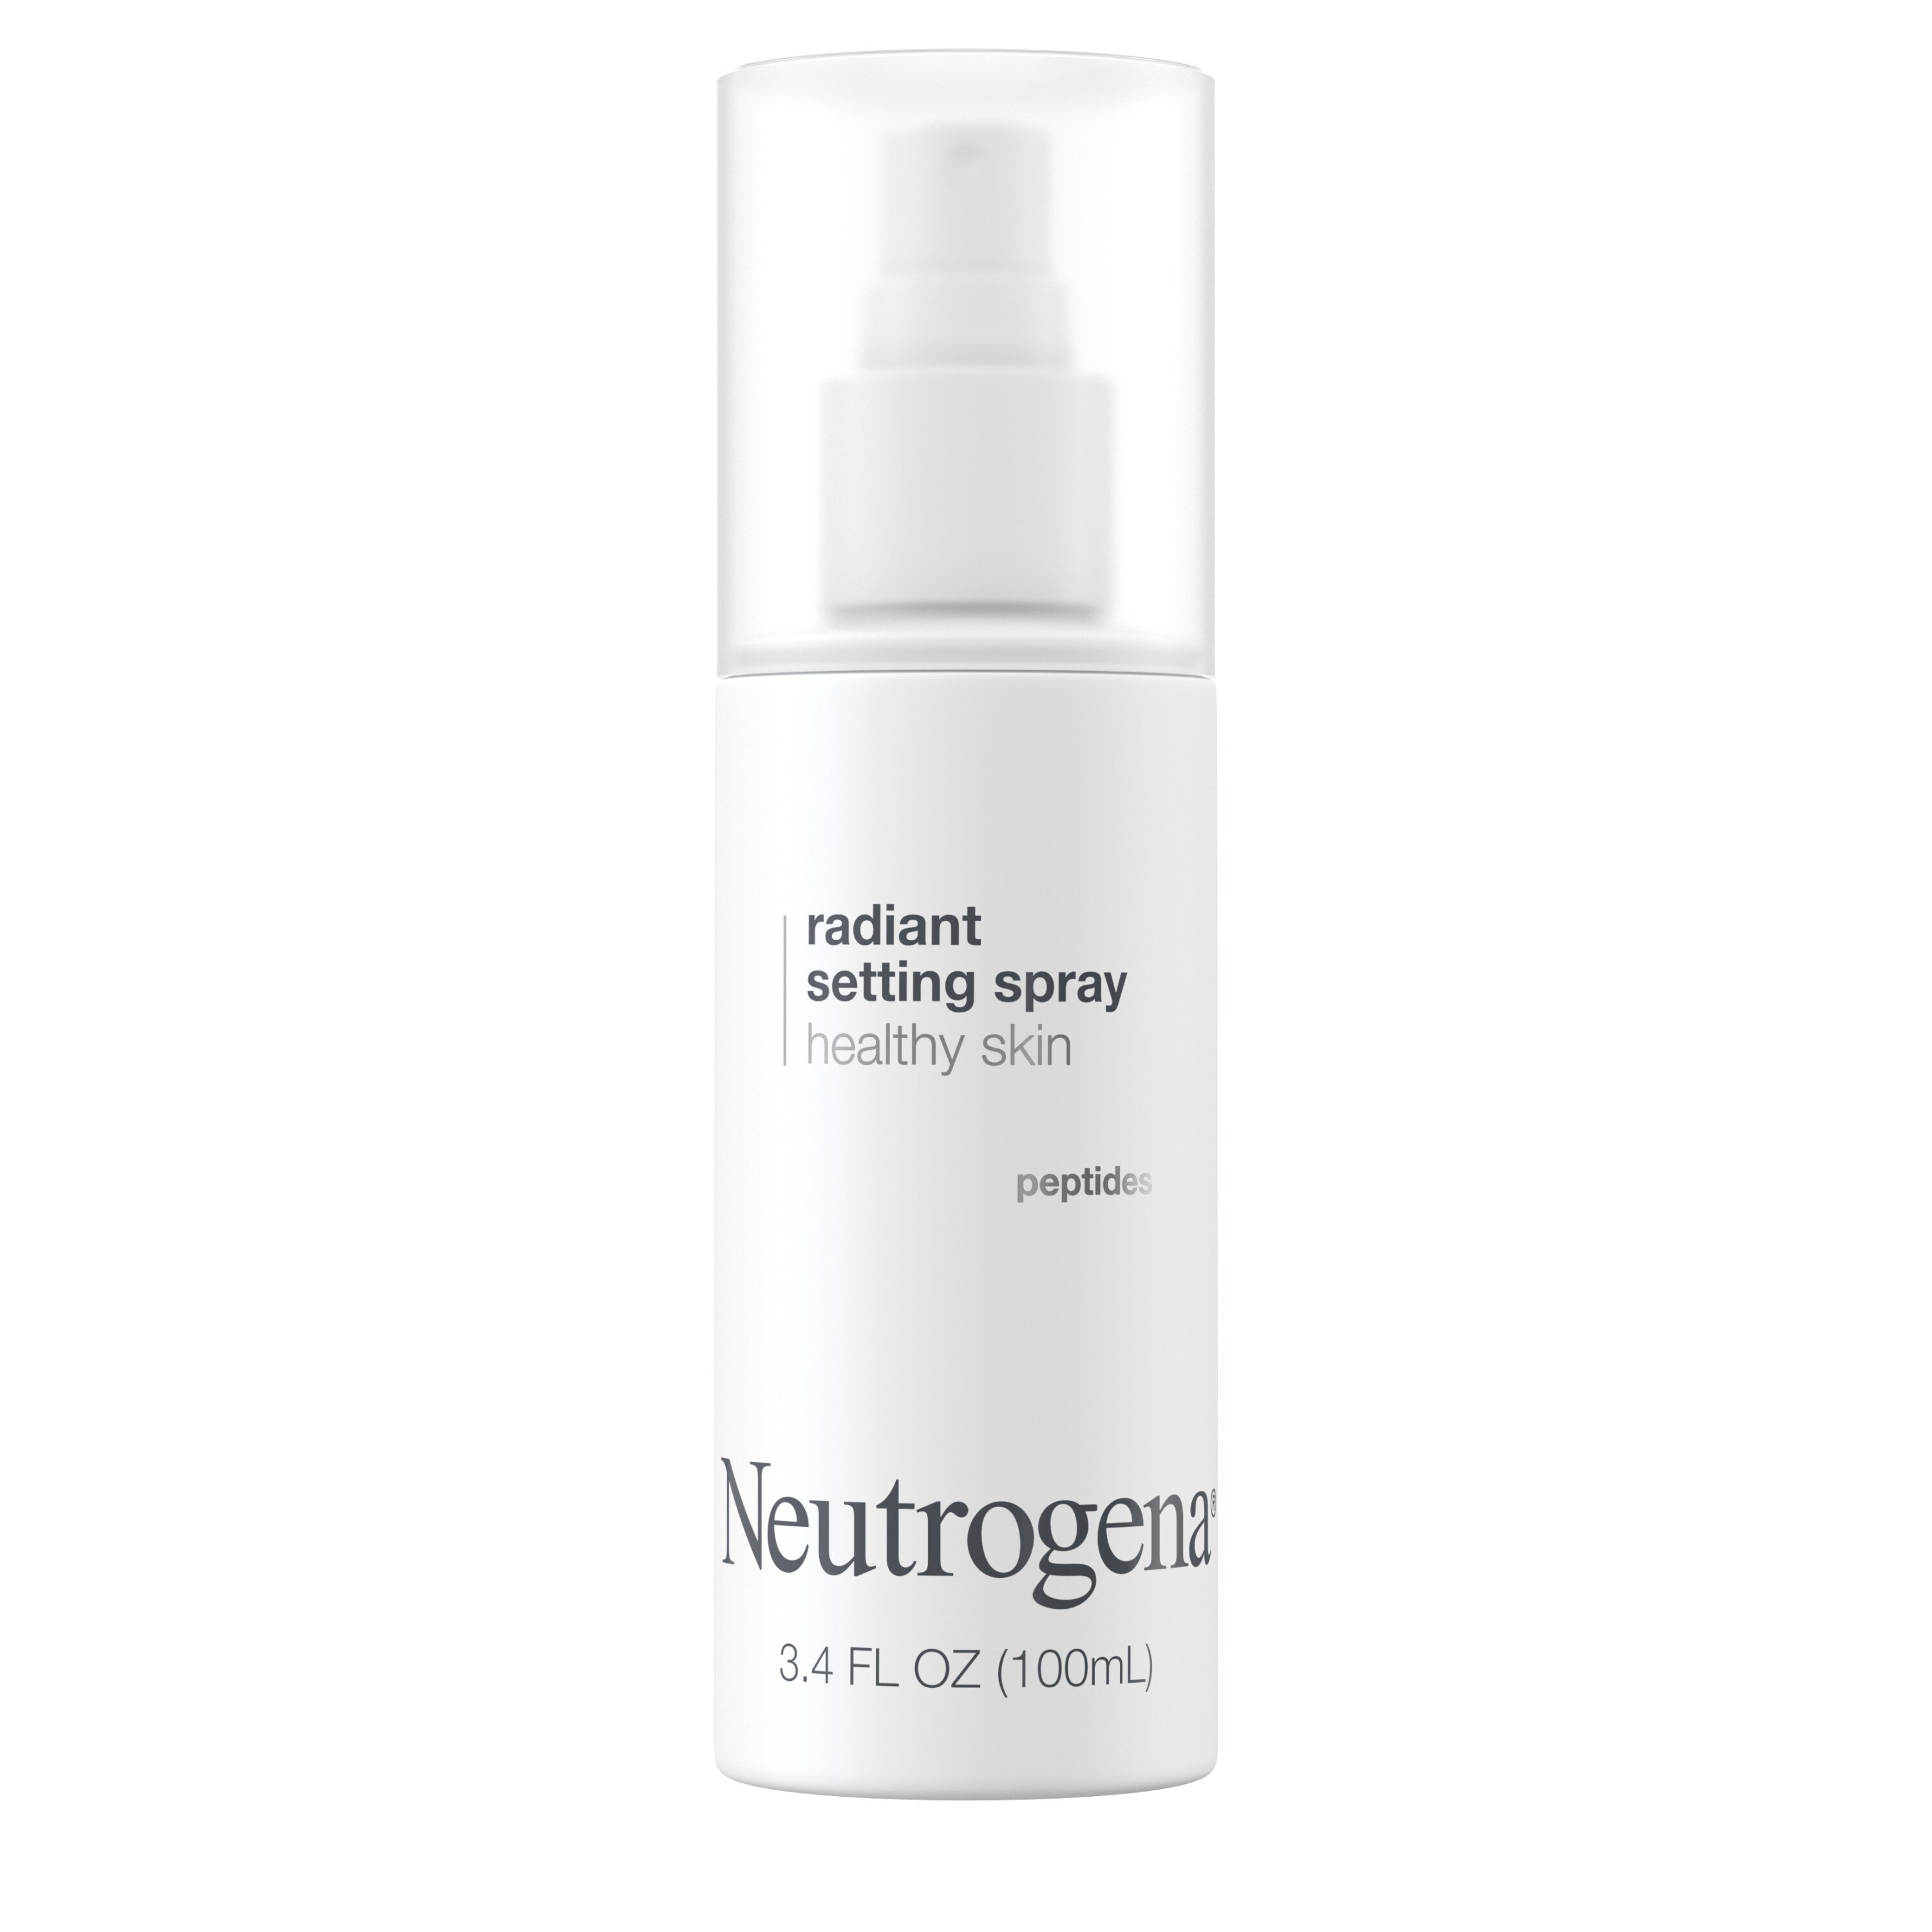 Neutrogena Radiant Makeup Setting Spray with Peptides, 3.4 OZ